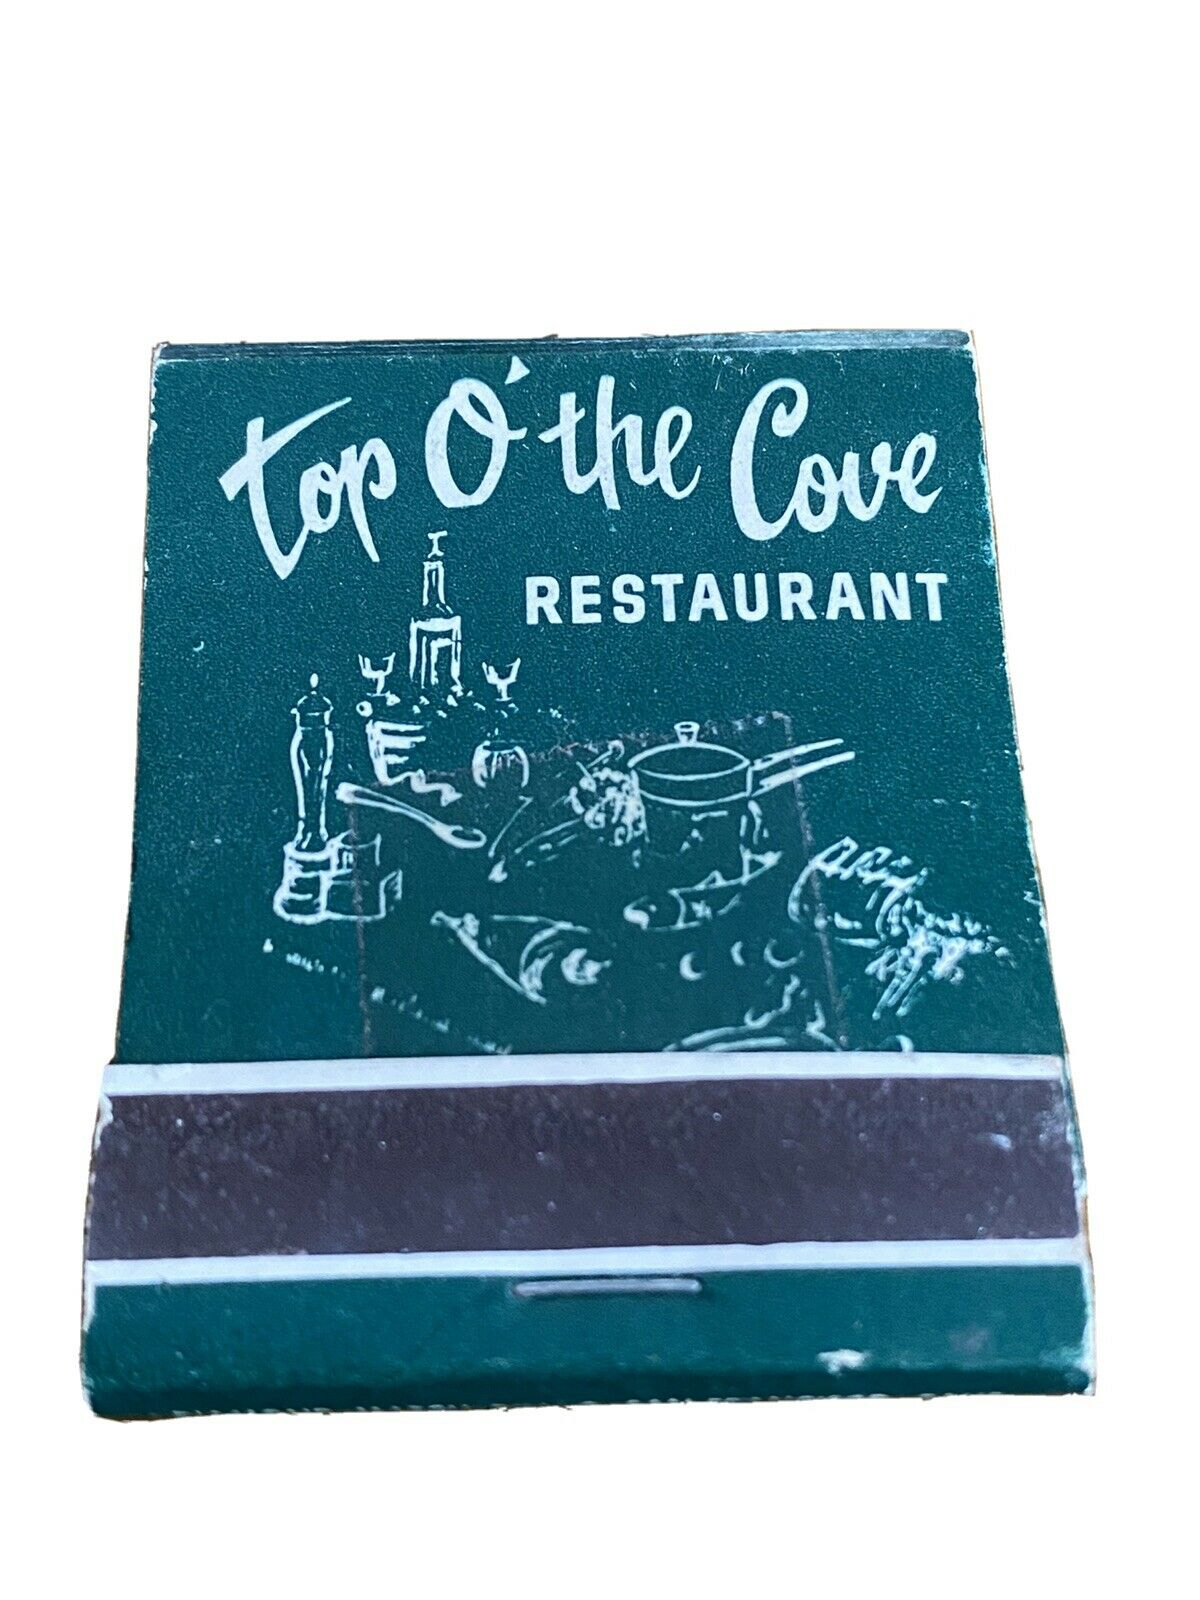 Vintage Full Matchbook - Top O’ The Cove Restaurant - La Jolla, California